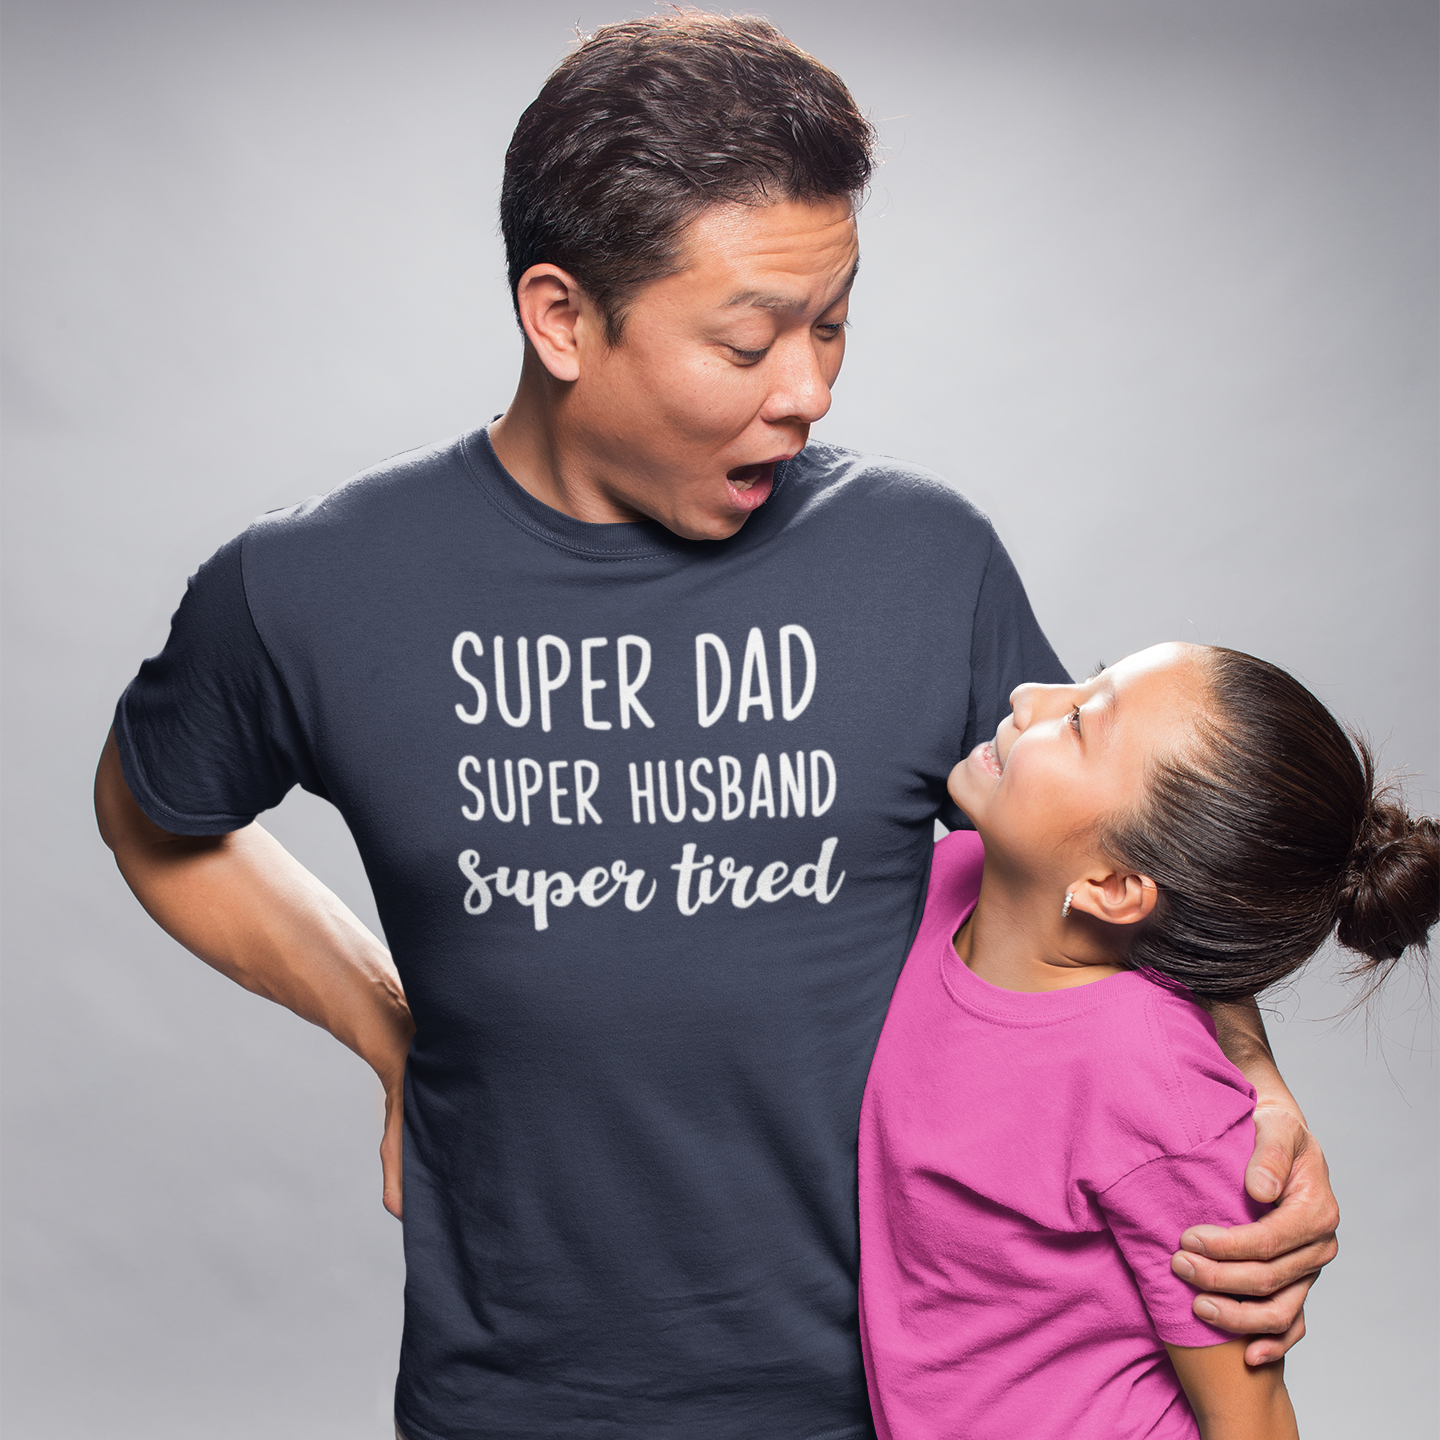 'Super dad / Super husband / Super tired' adult shirt